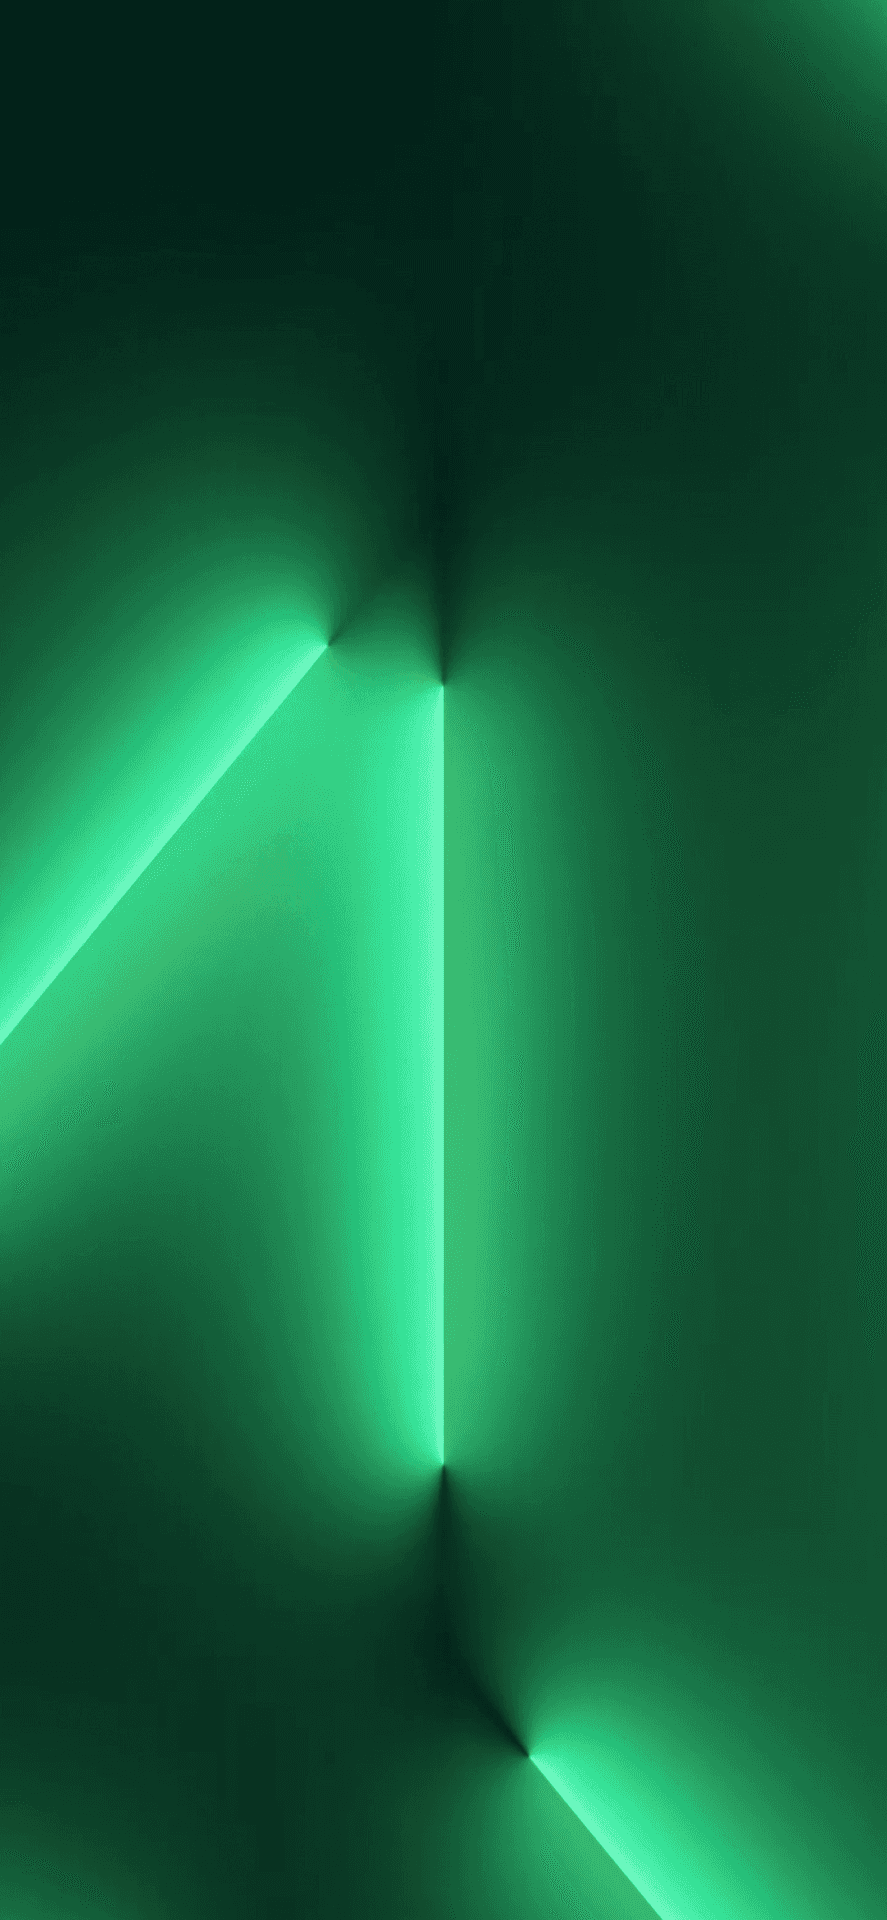 Green Light On A Dark Background